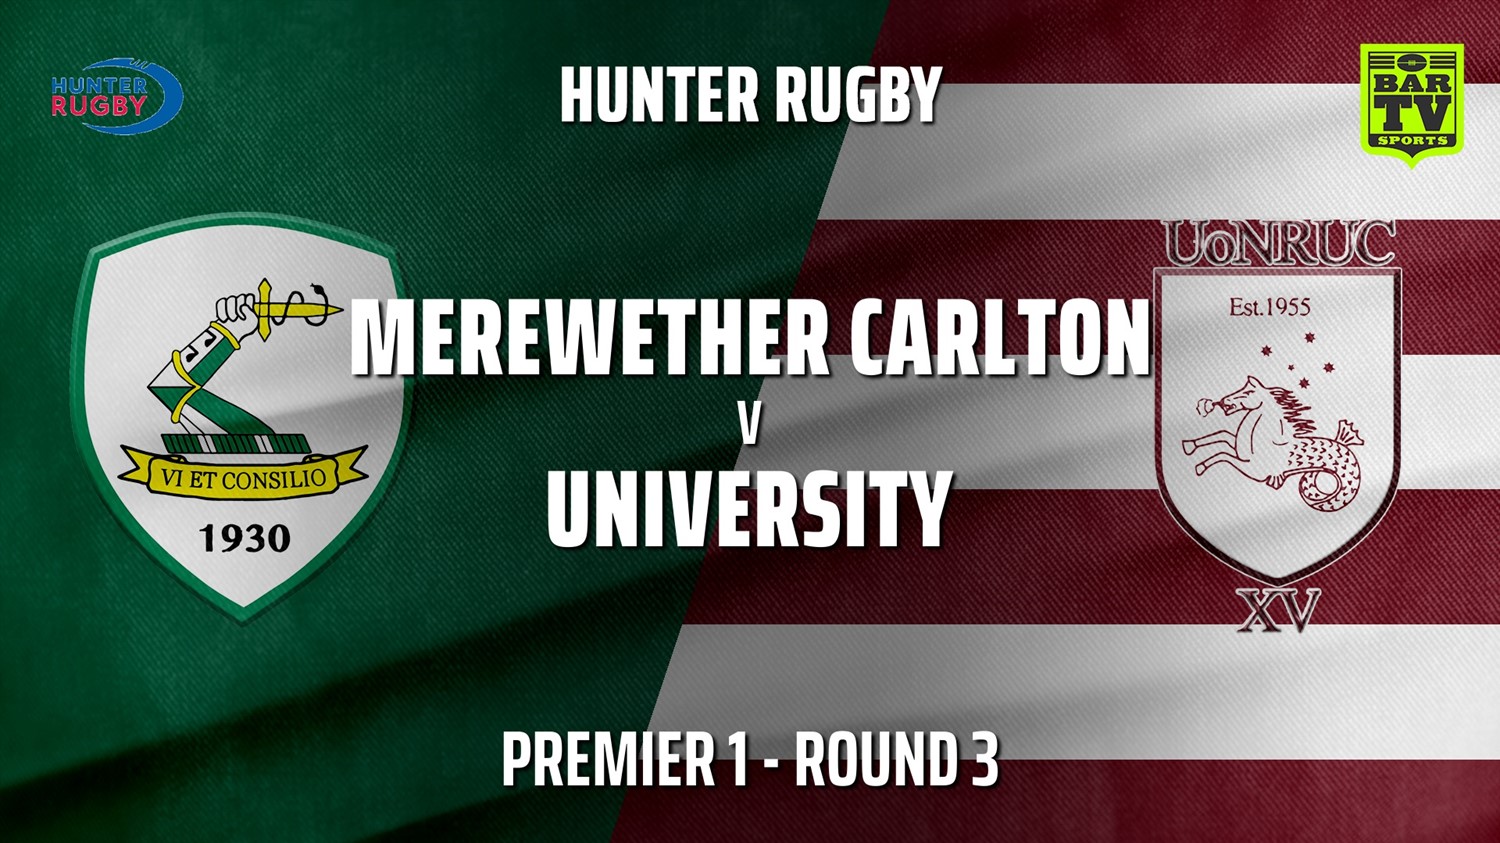 210501-HRU Round 3 - Premier 1 - Merewether Carlton v University Of Newcastle Slate Image